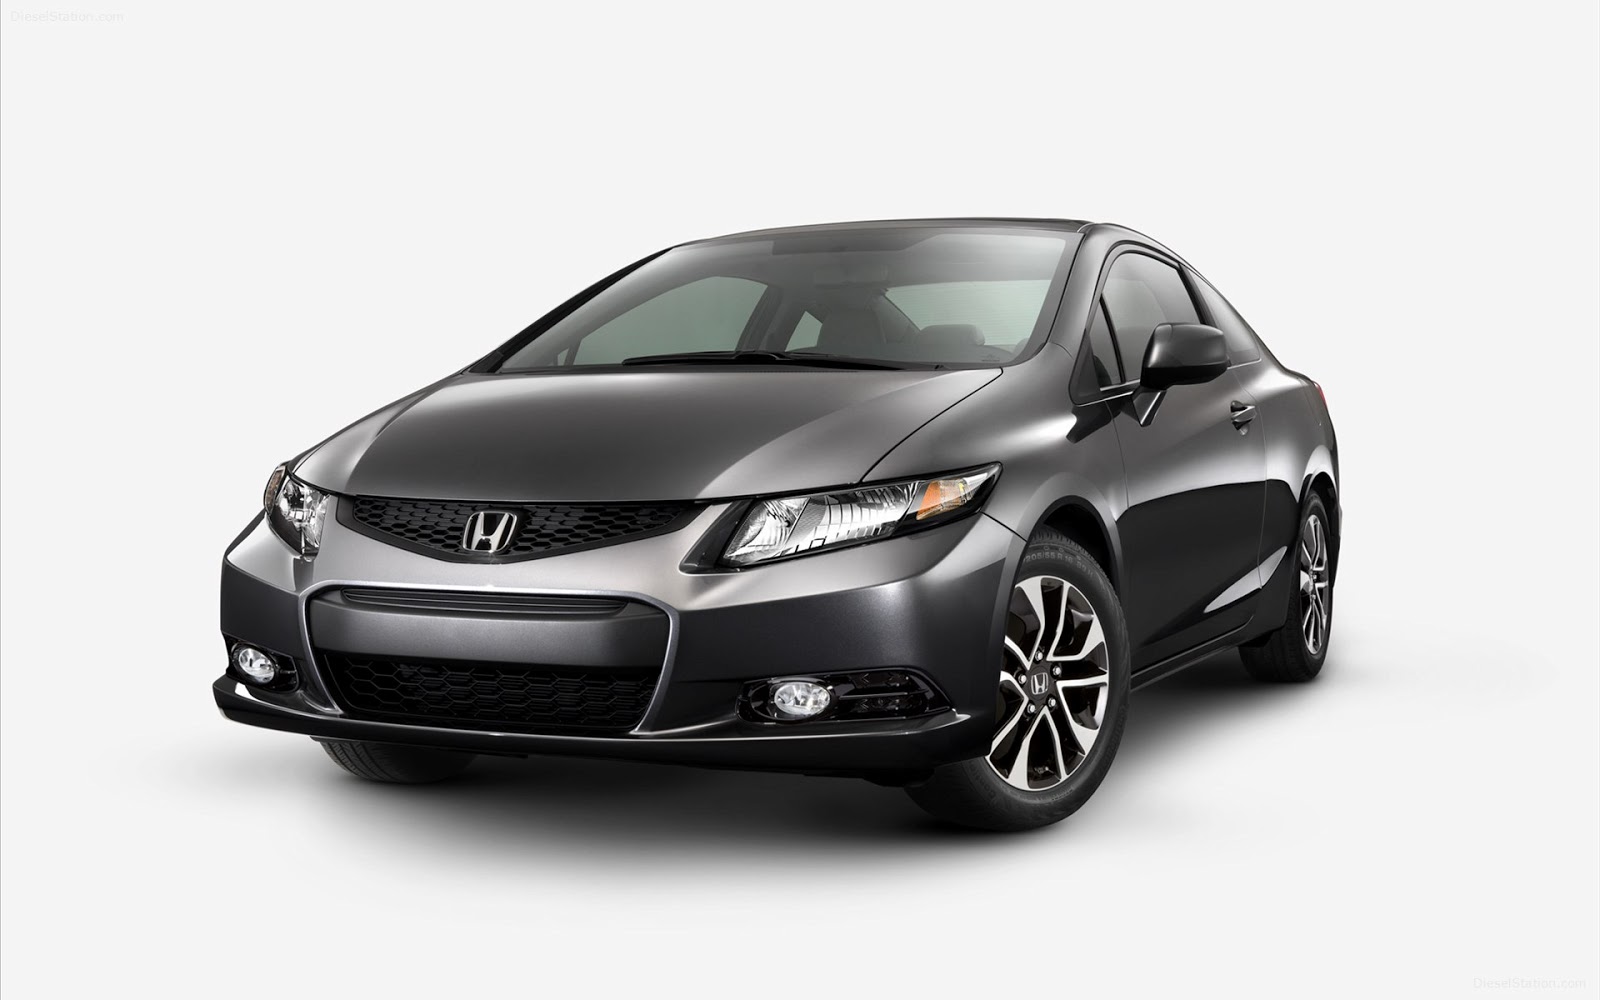 2013 Honda Civic Coupe Specs and Price Latest | Otomild